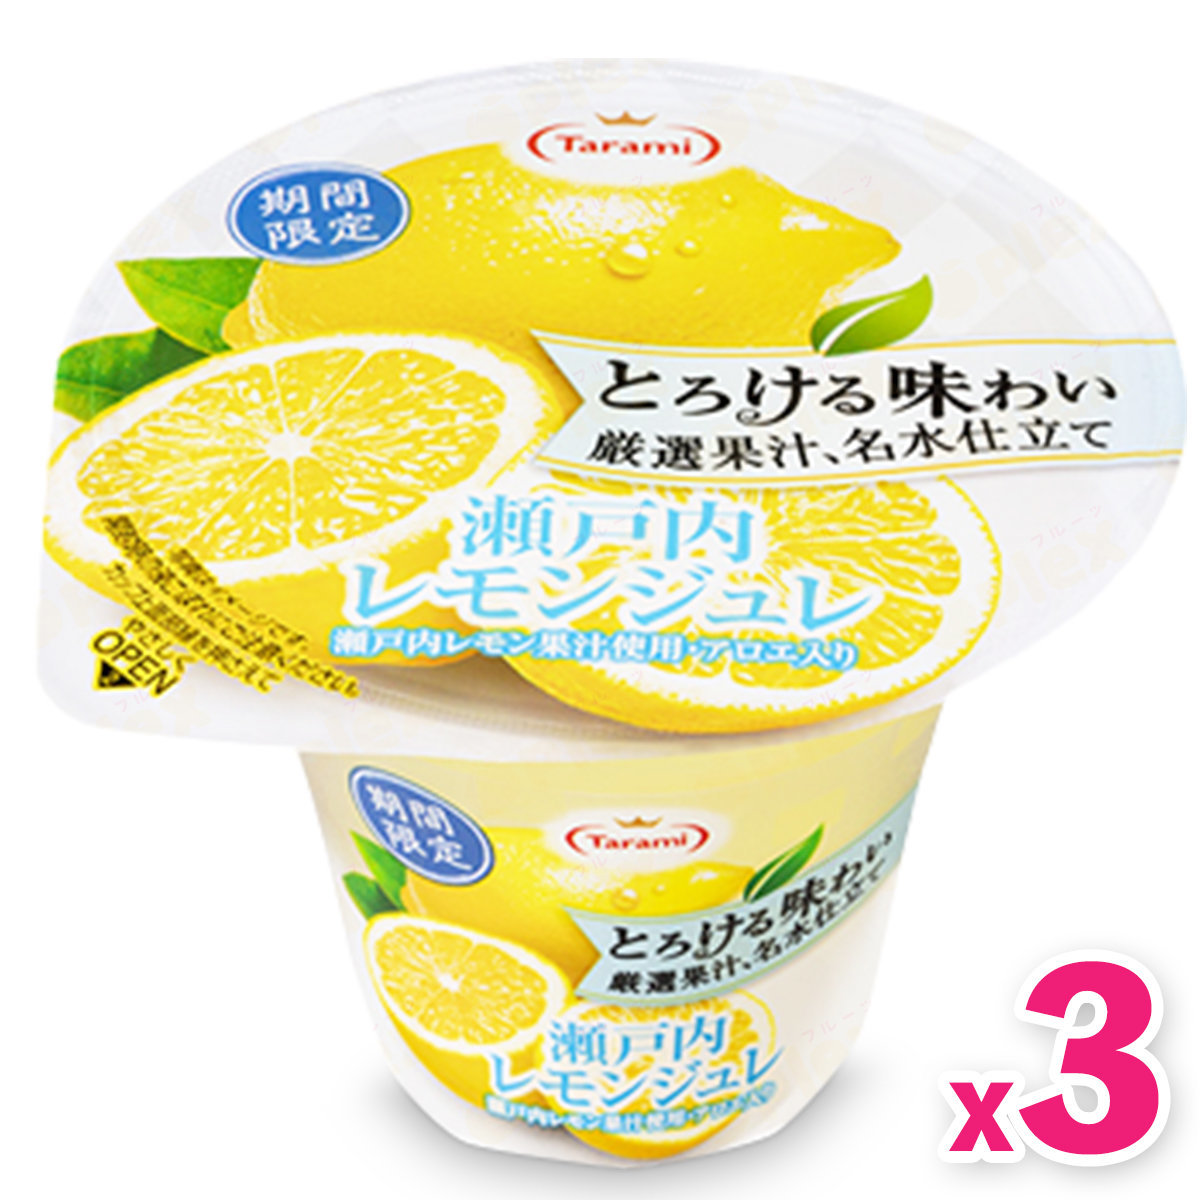 Tarami Tarami Melting Taste Series Fruit Jelly Lemon 210g X 3pcs Hktvmall Online Shopping